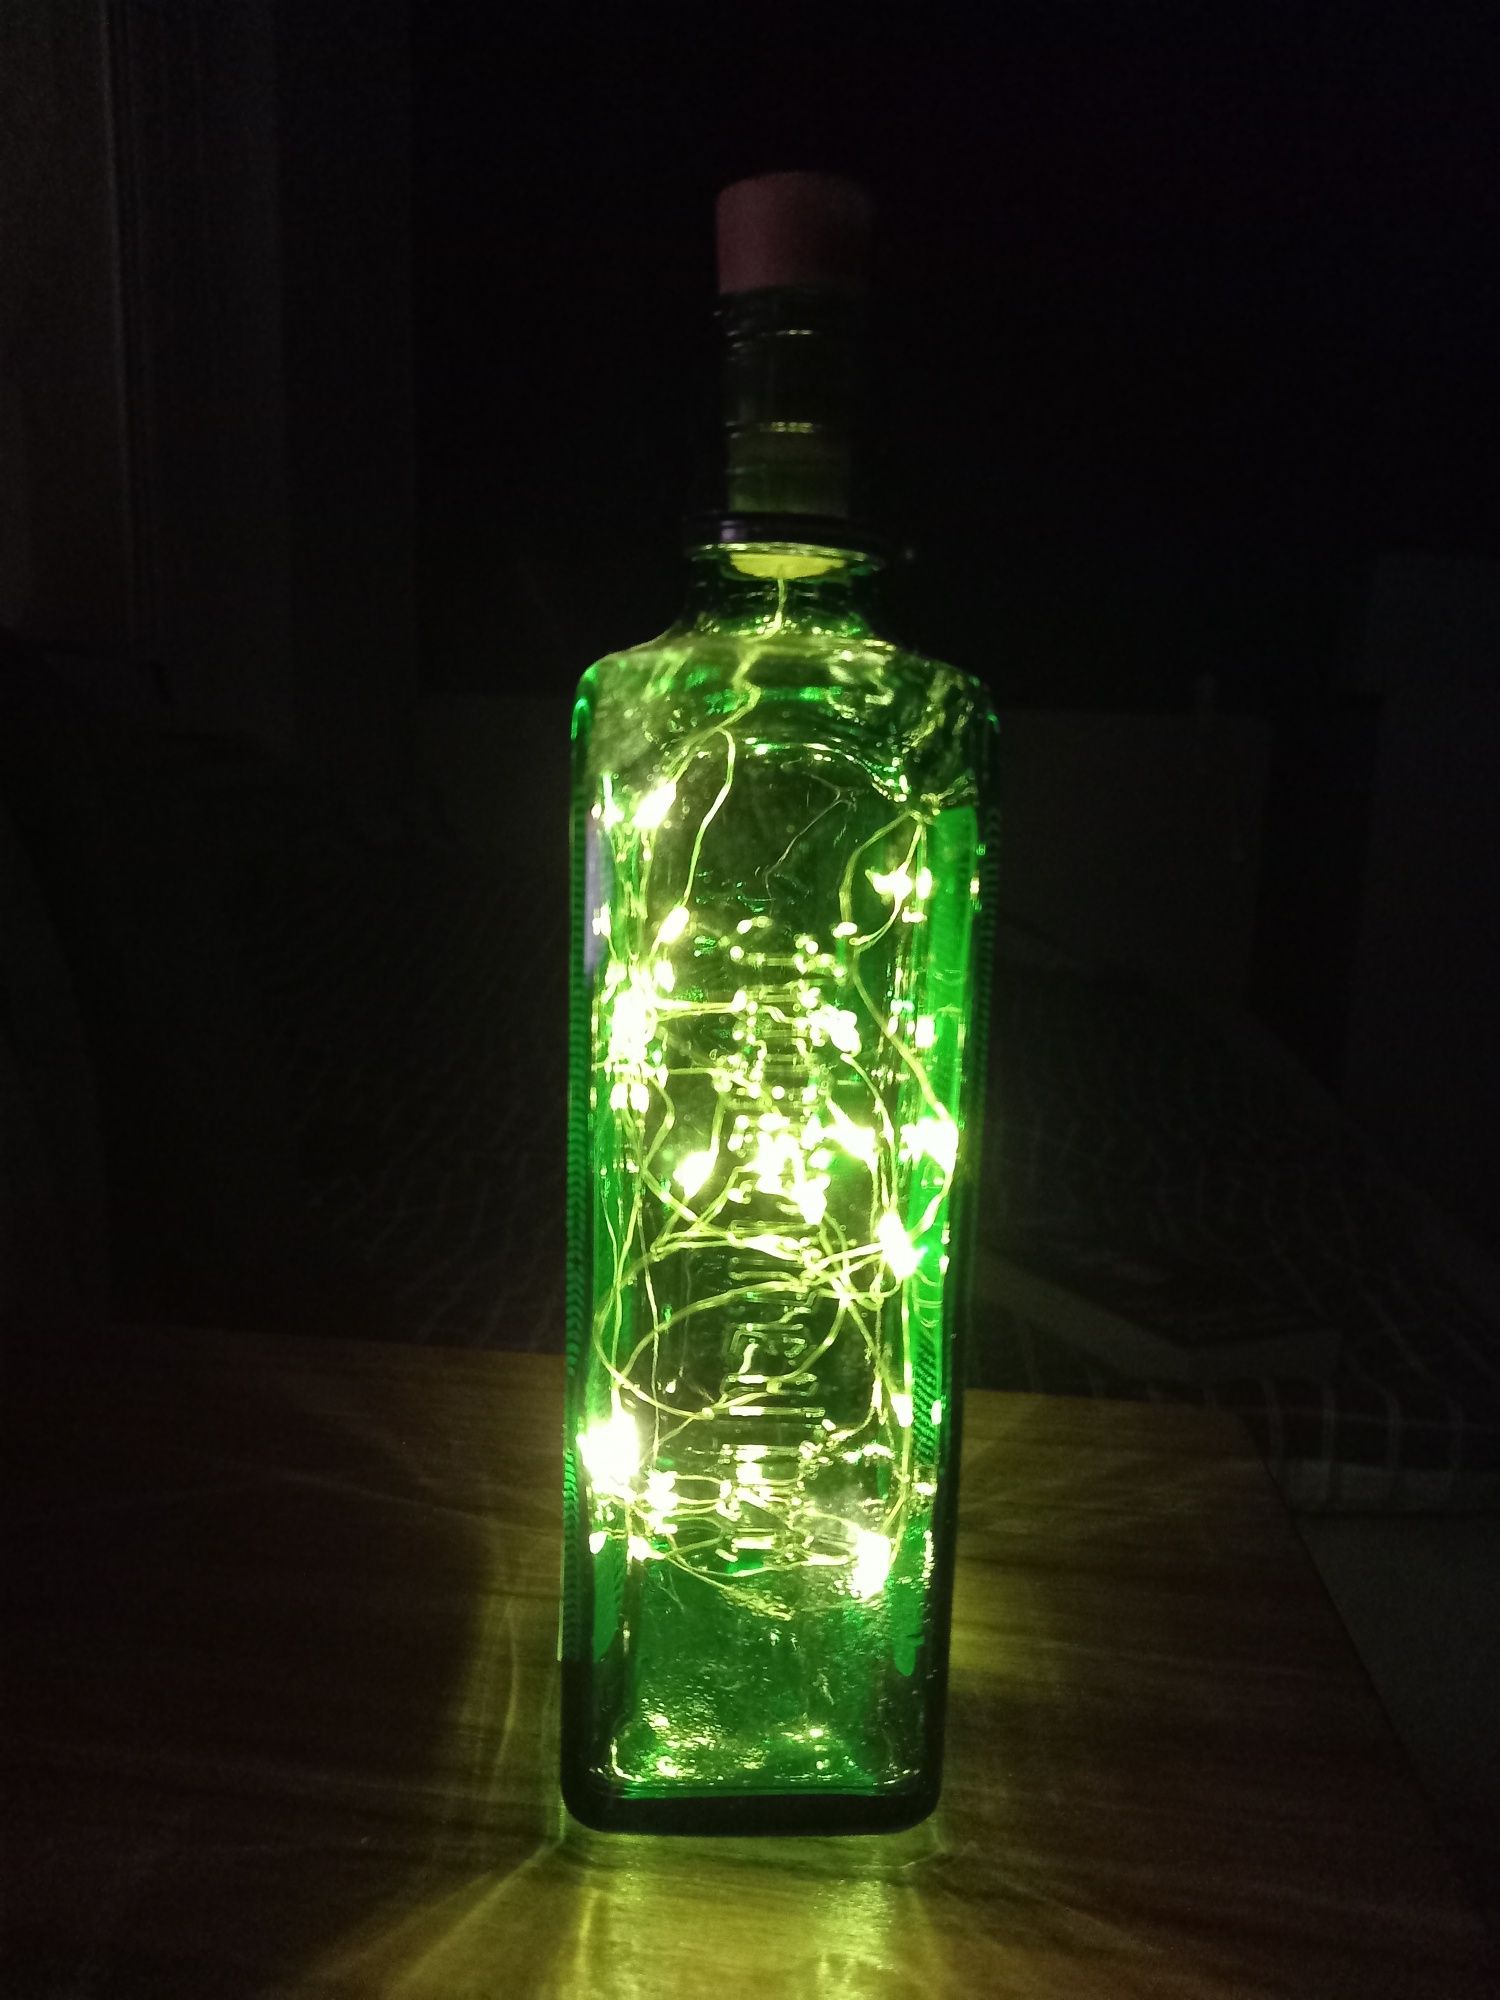 Lampa led/ Choinka świąteczna z  butelki Jagermeister